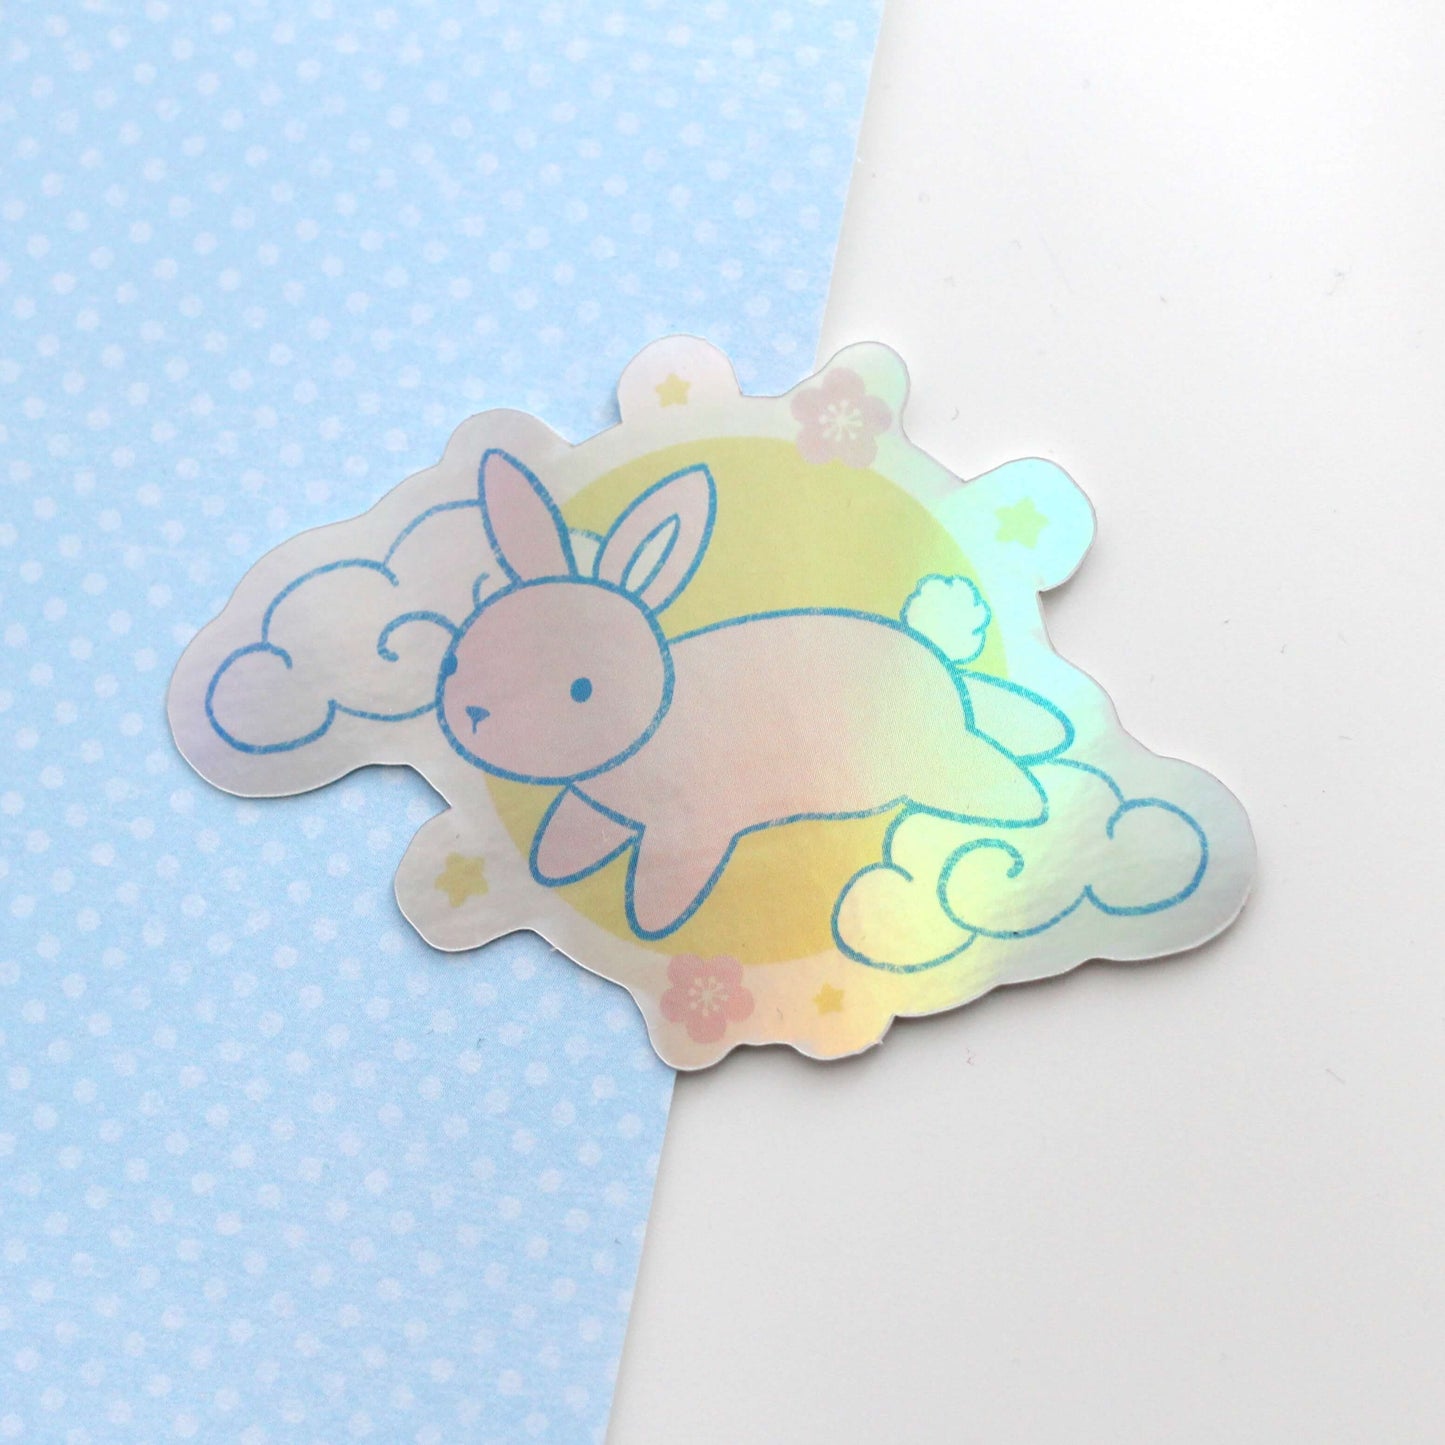 Holographic Lunar Bunny Sticker. Cute Rabbit Decal